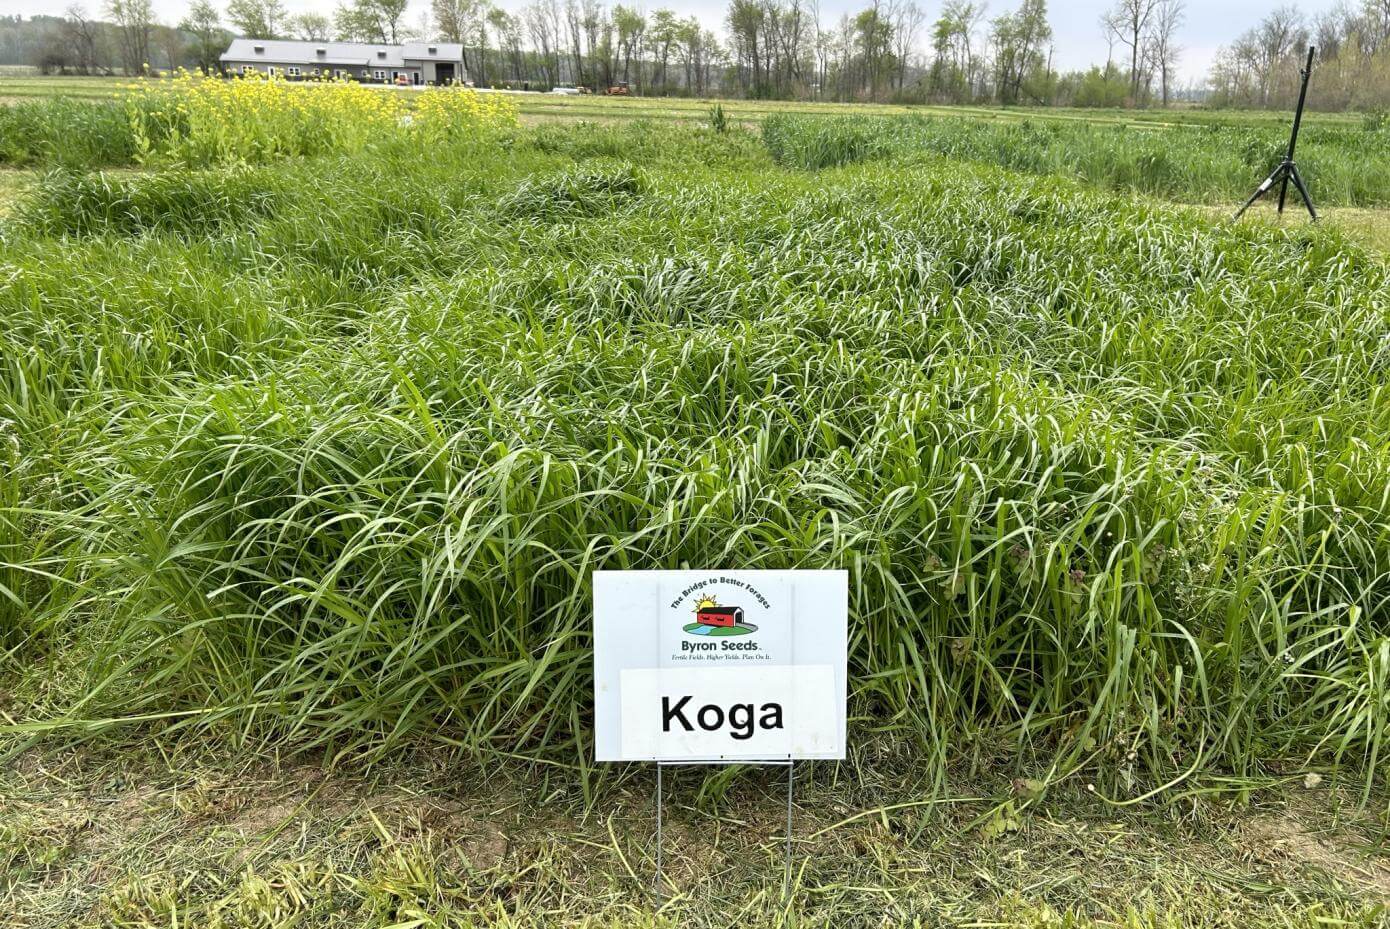 Koga Tetraploid annual ryegrass in a field